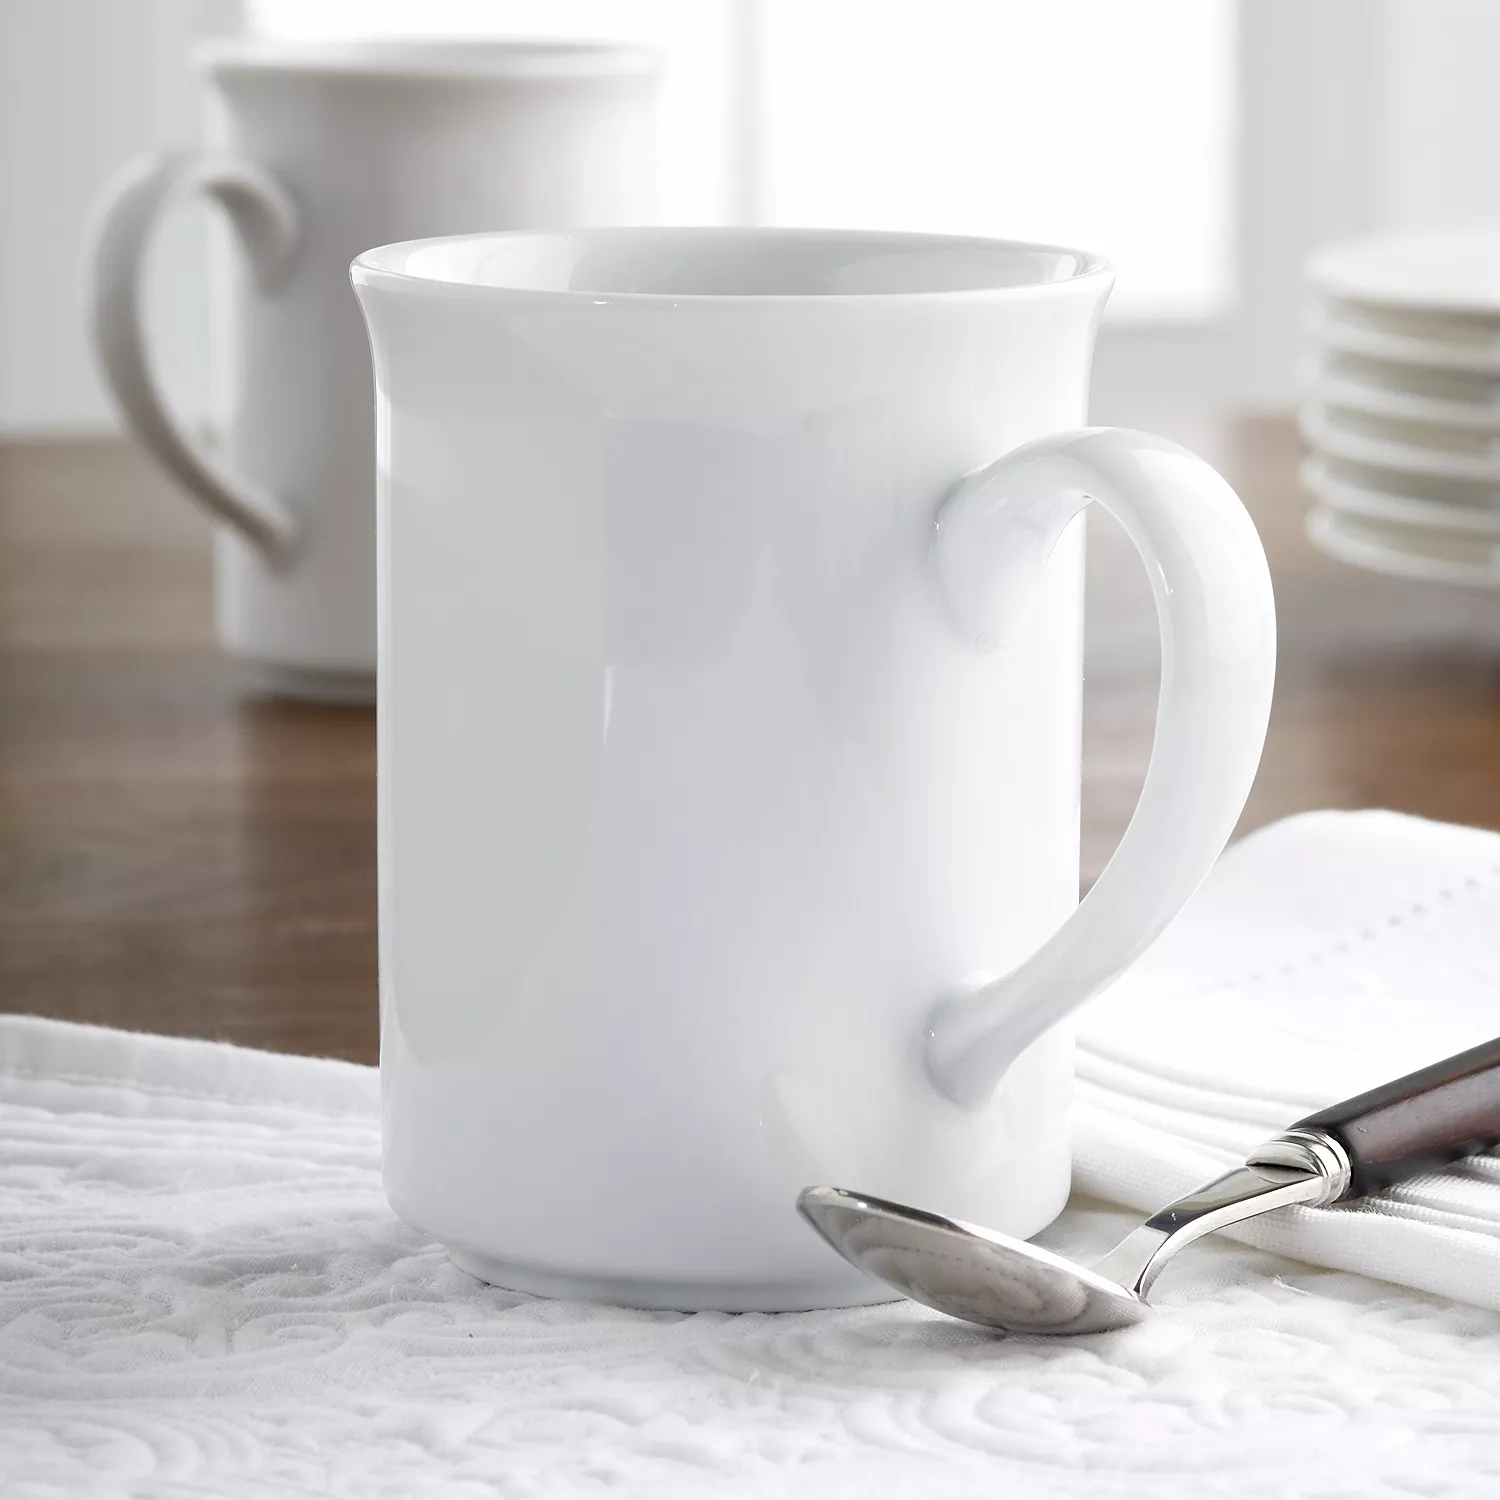 8 Oz. (Ounce) White Diner Style Coffee Mug, Coffee Mugs, Coffee Bar Cups,  Restaurant Quality - 3 dozen (36 cups)